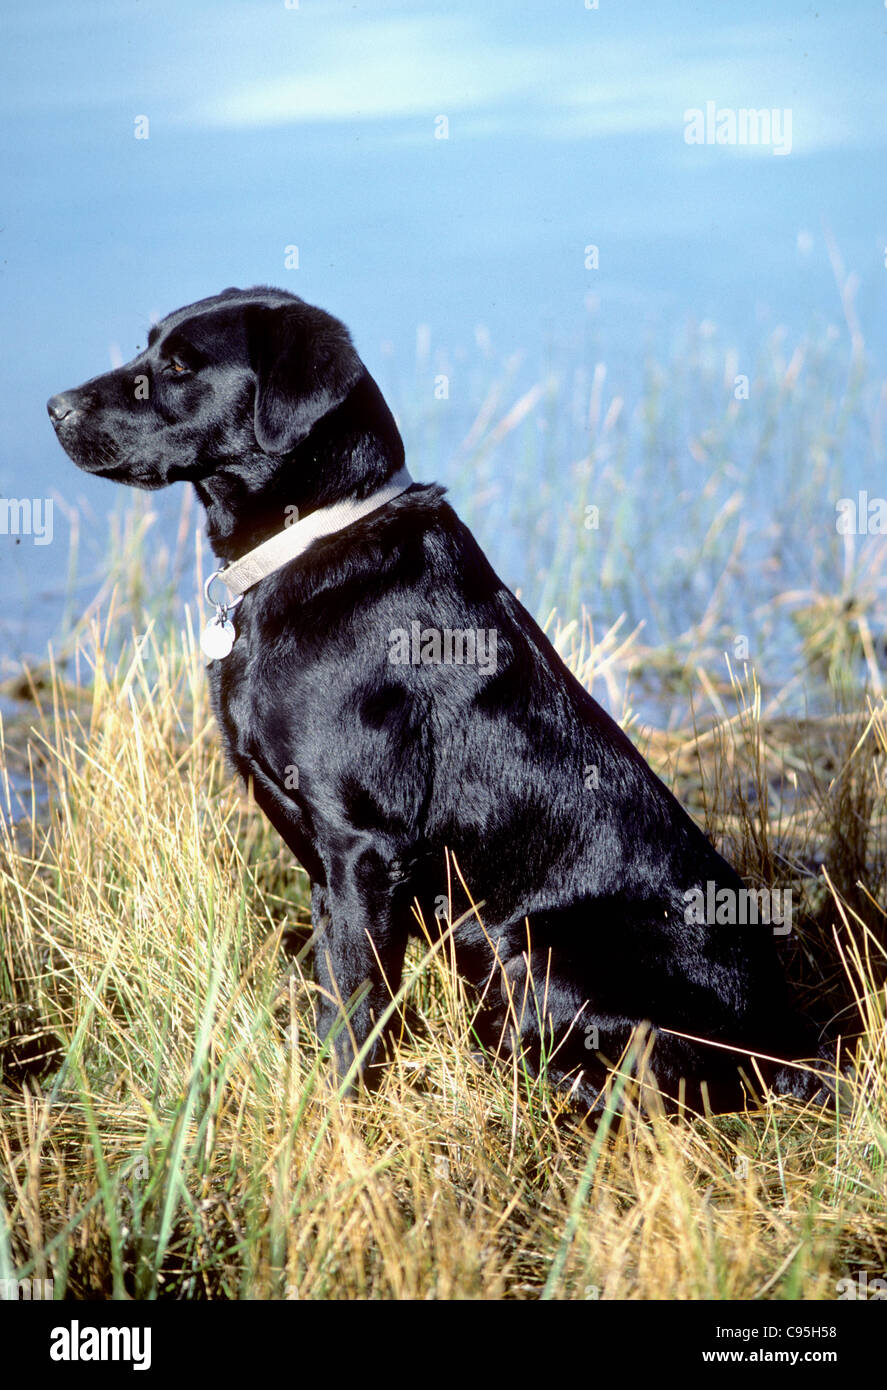 Black Labrador retriever Stockfoto